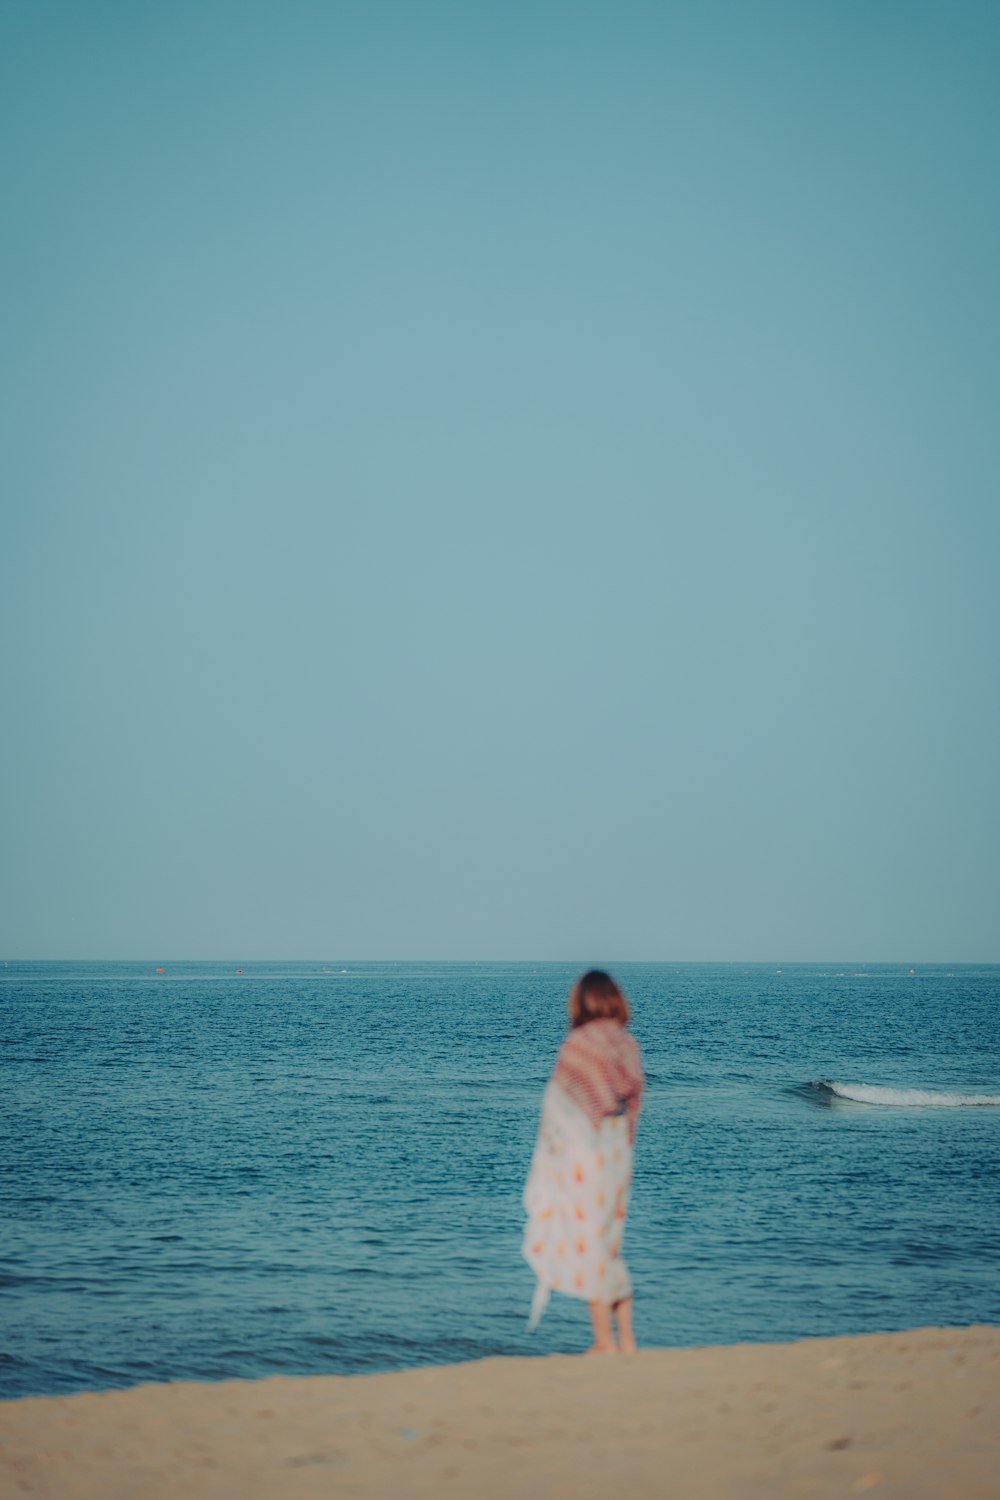 a woman in a white dress on a beach